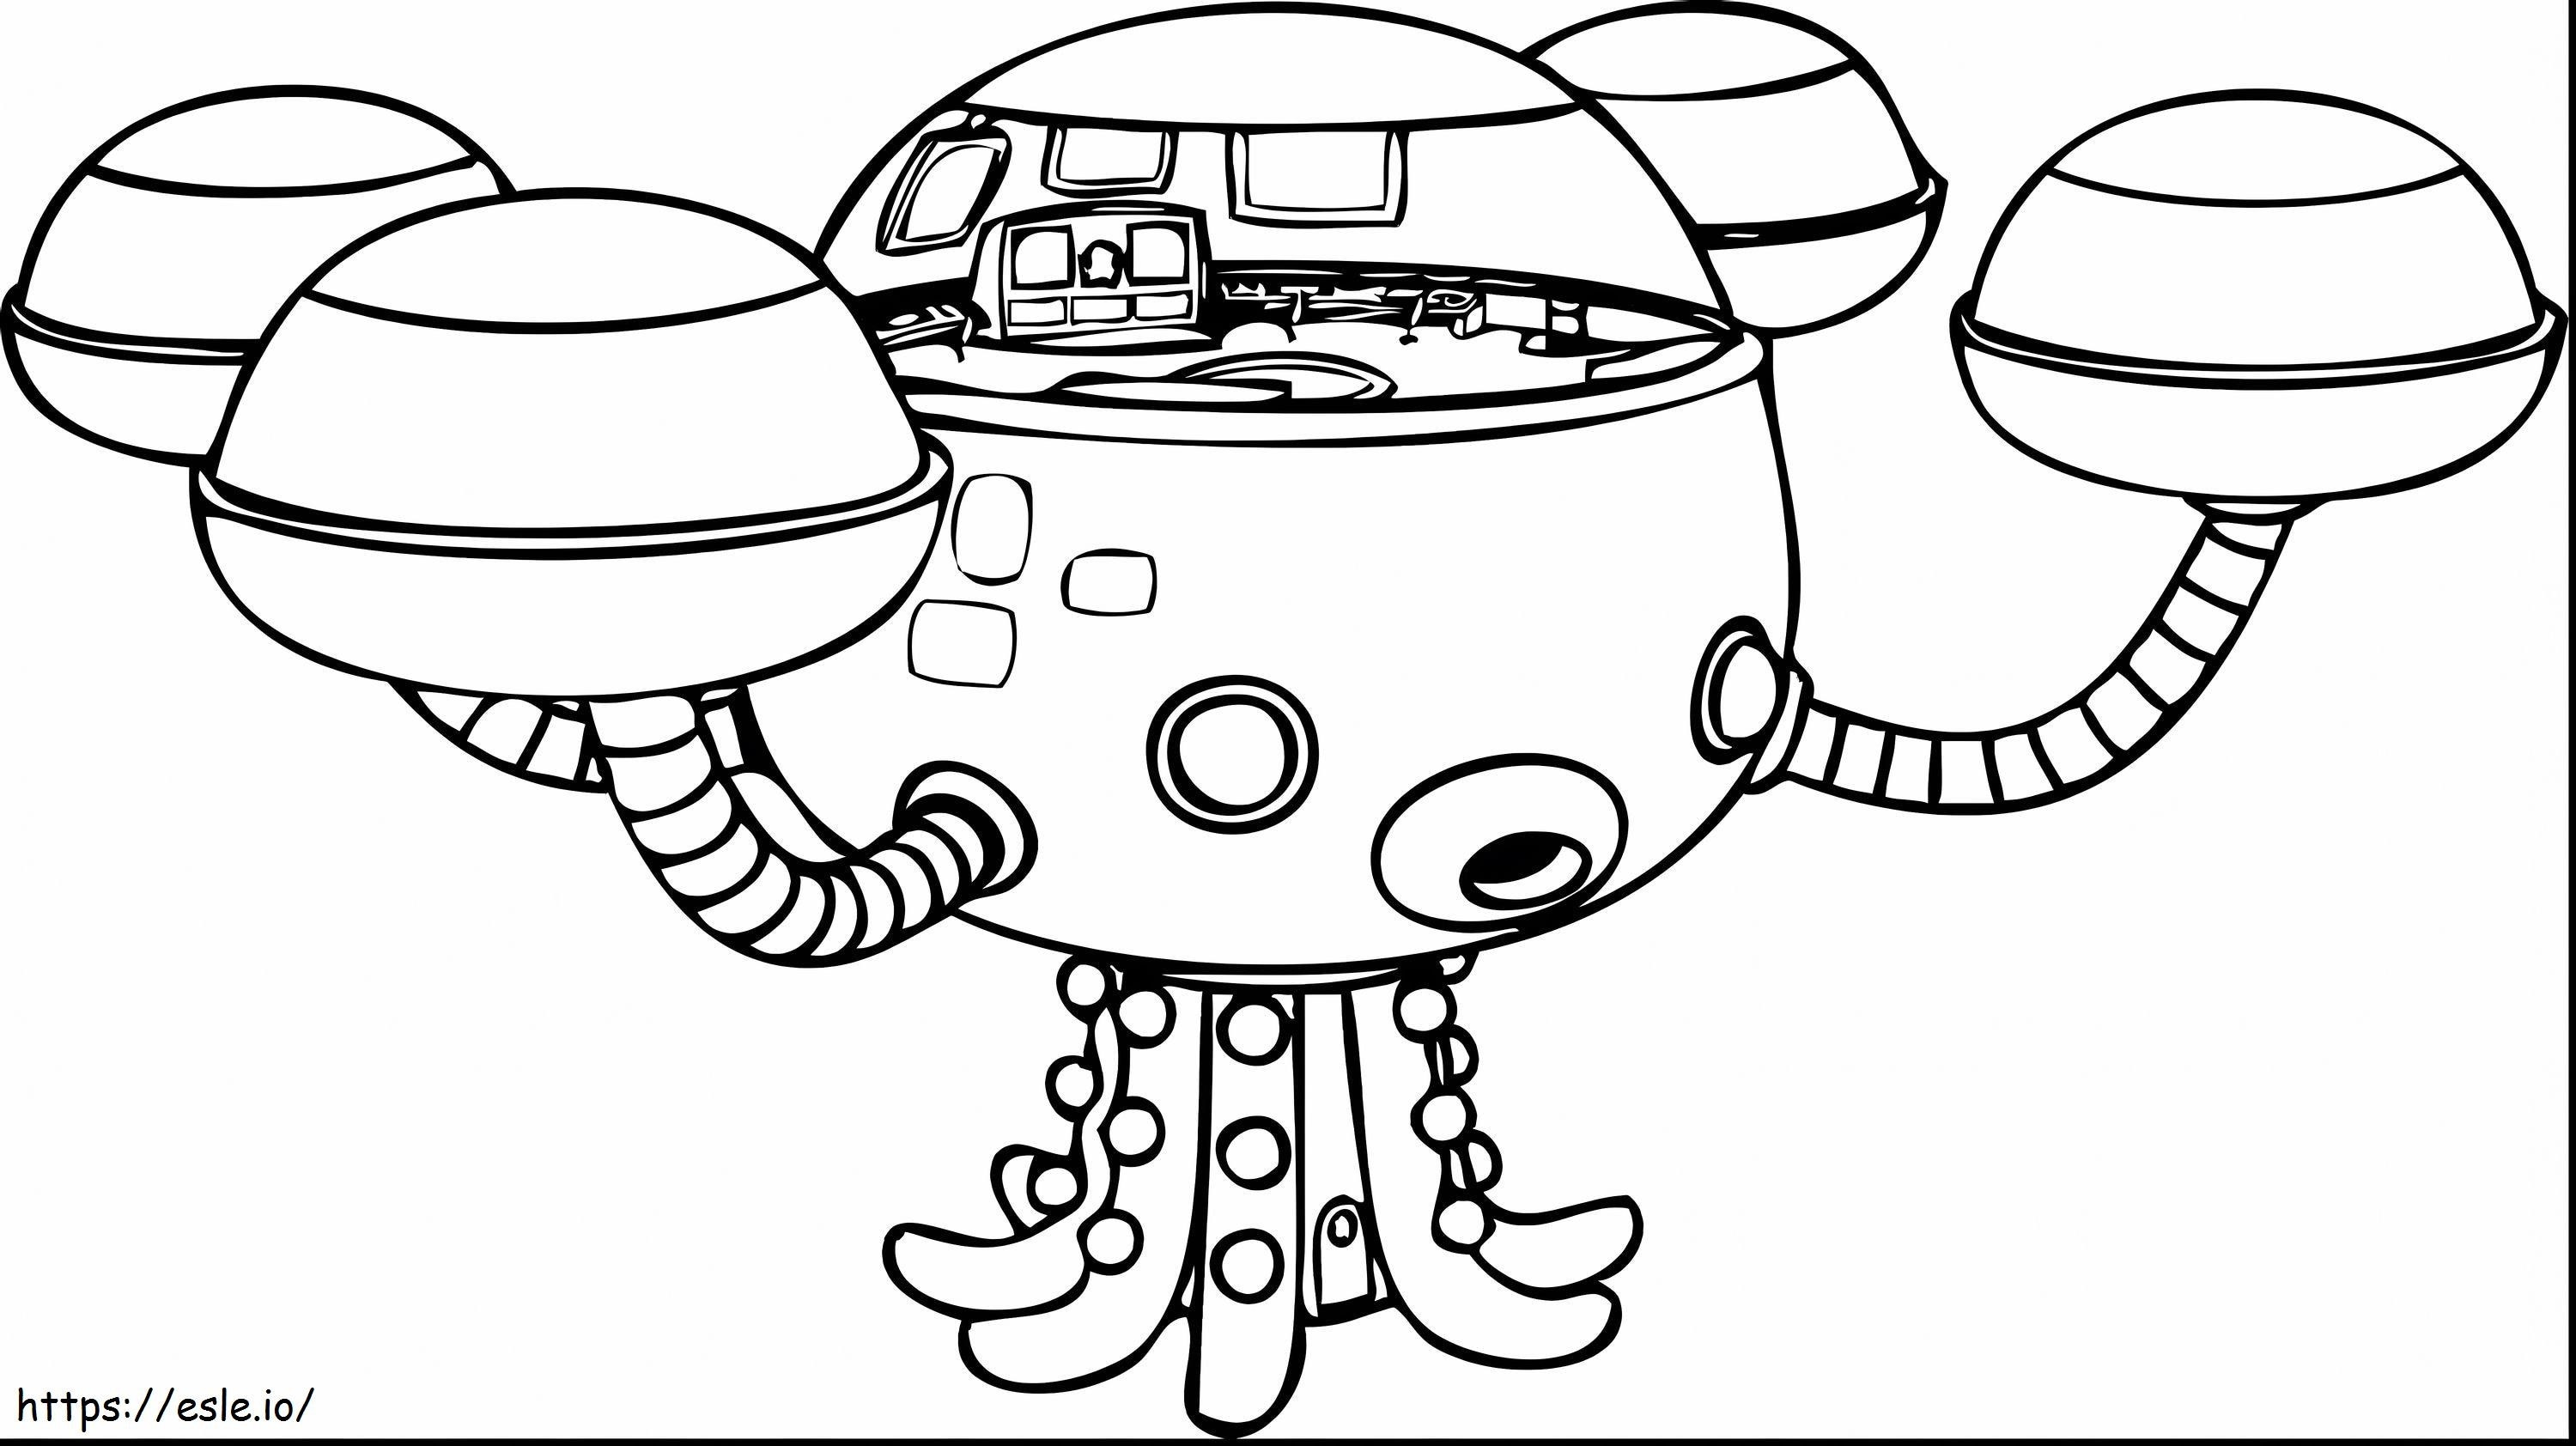 Spaceship Octonauts coloring page